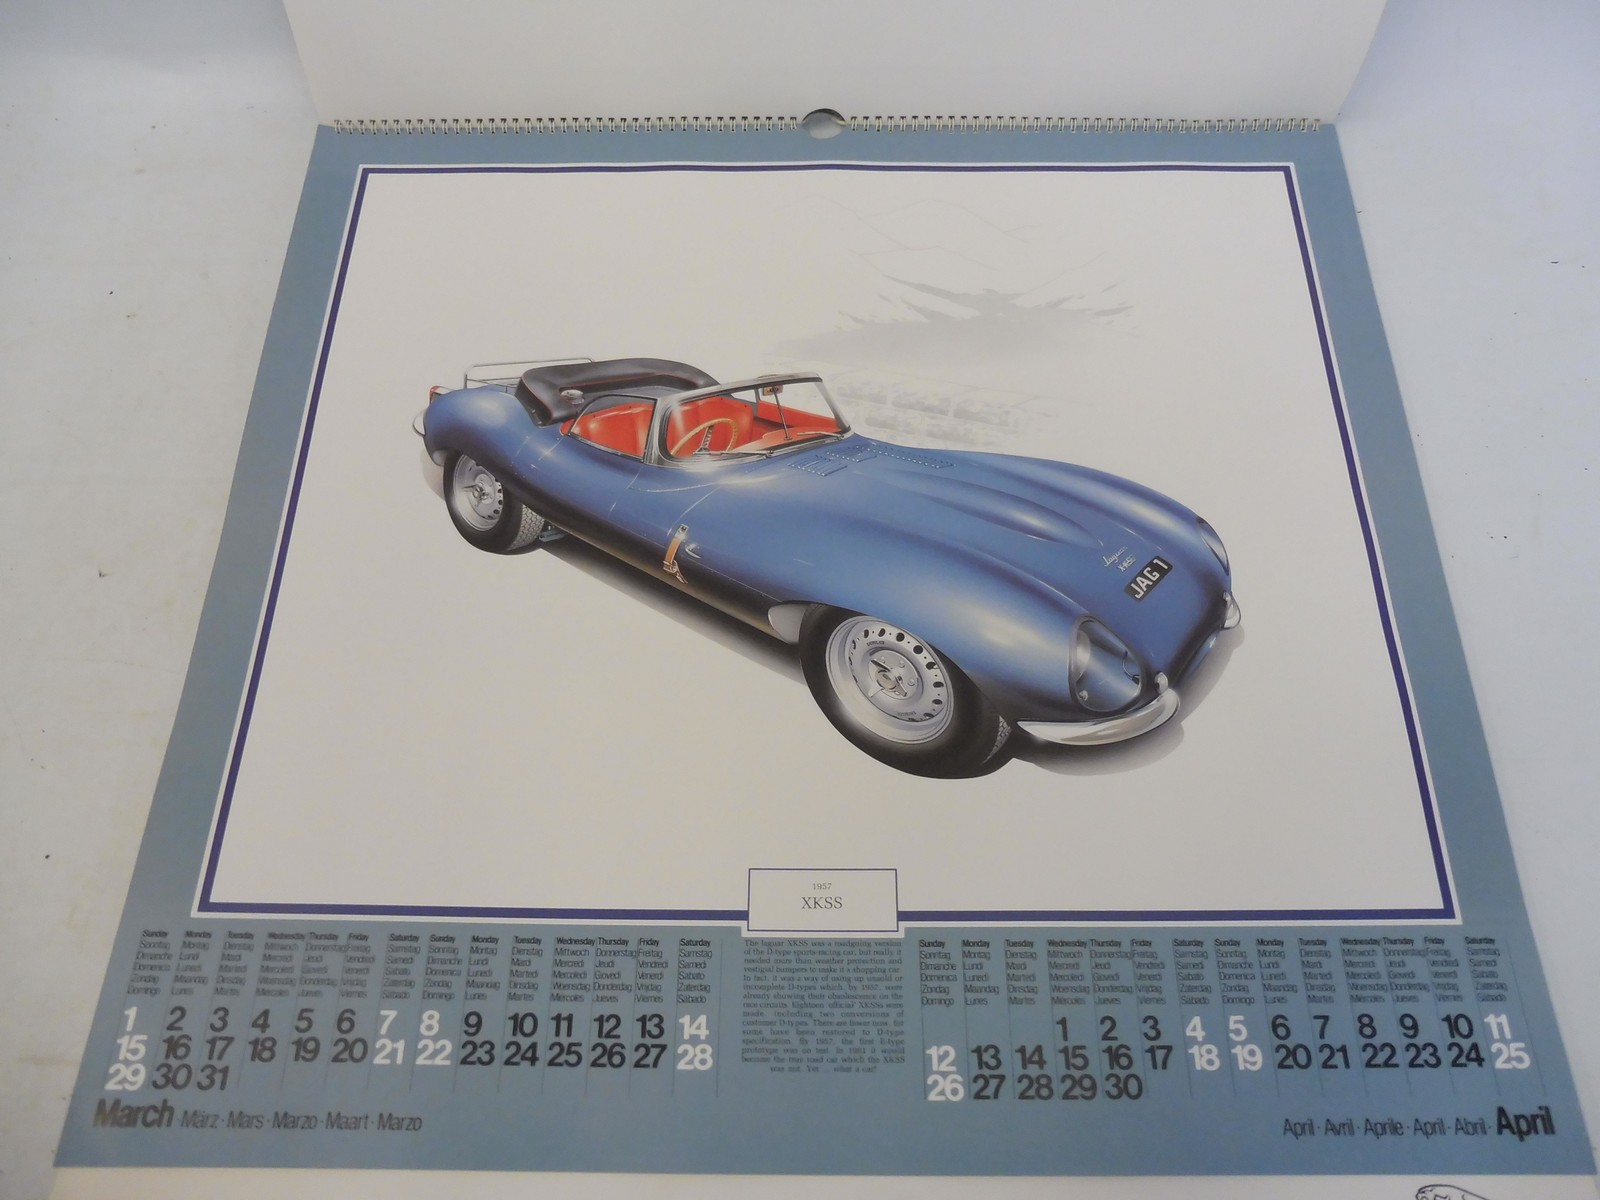 A 1987 Jaguar calendar. - Image 2 of 4